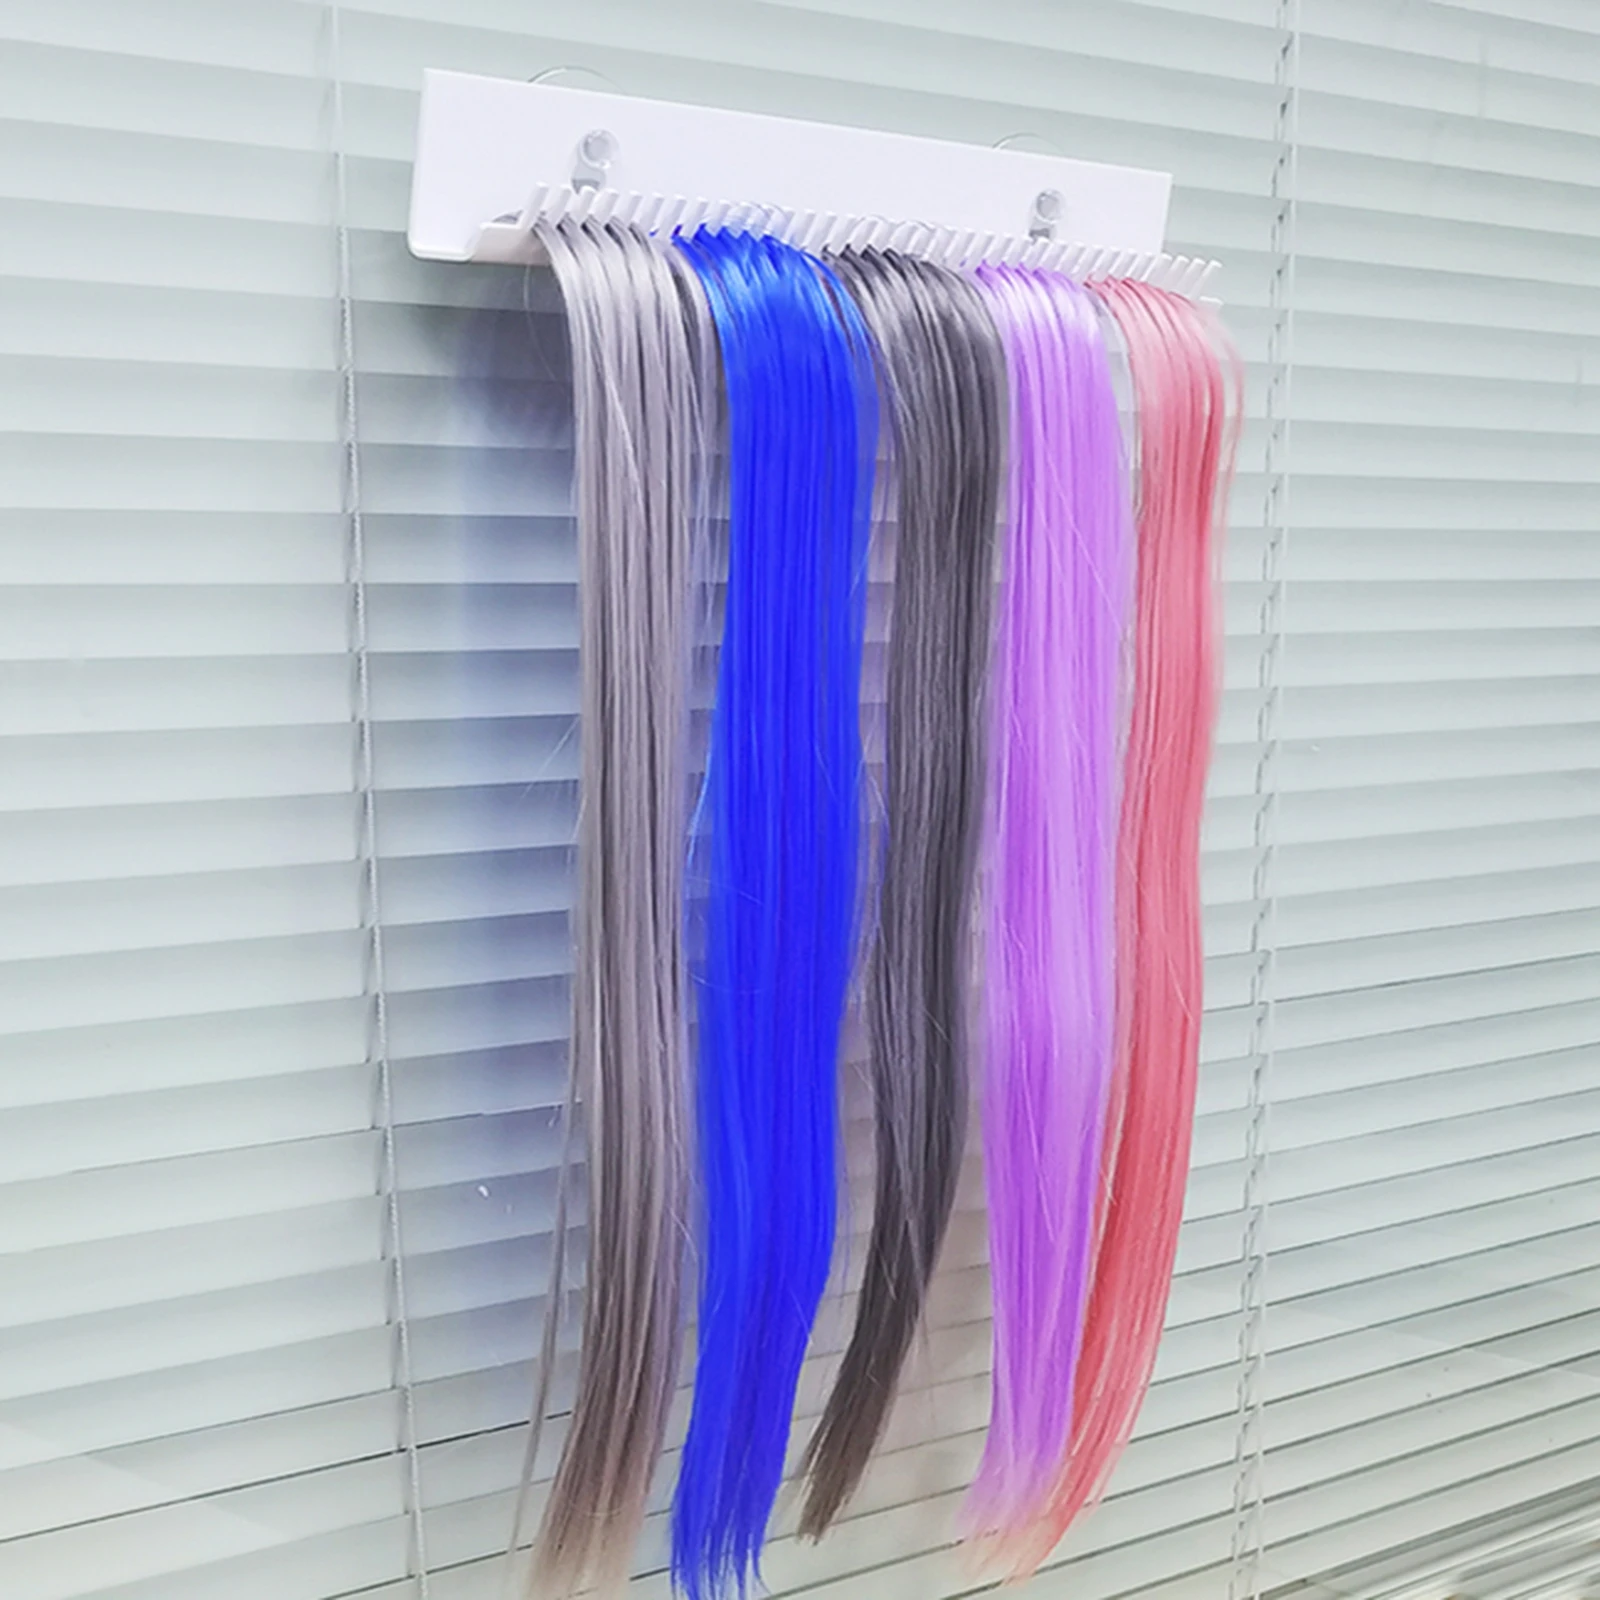 Professional Hair Extension Storage Holder Rack Hanger for Braiding Weaving Hair Extensions Holder Rack Accessory